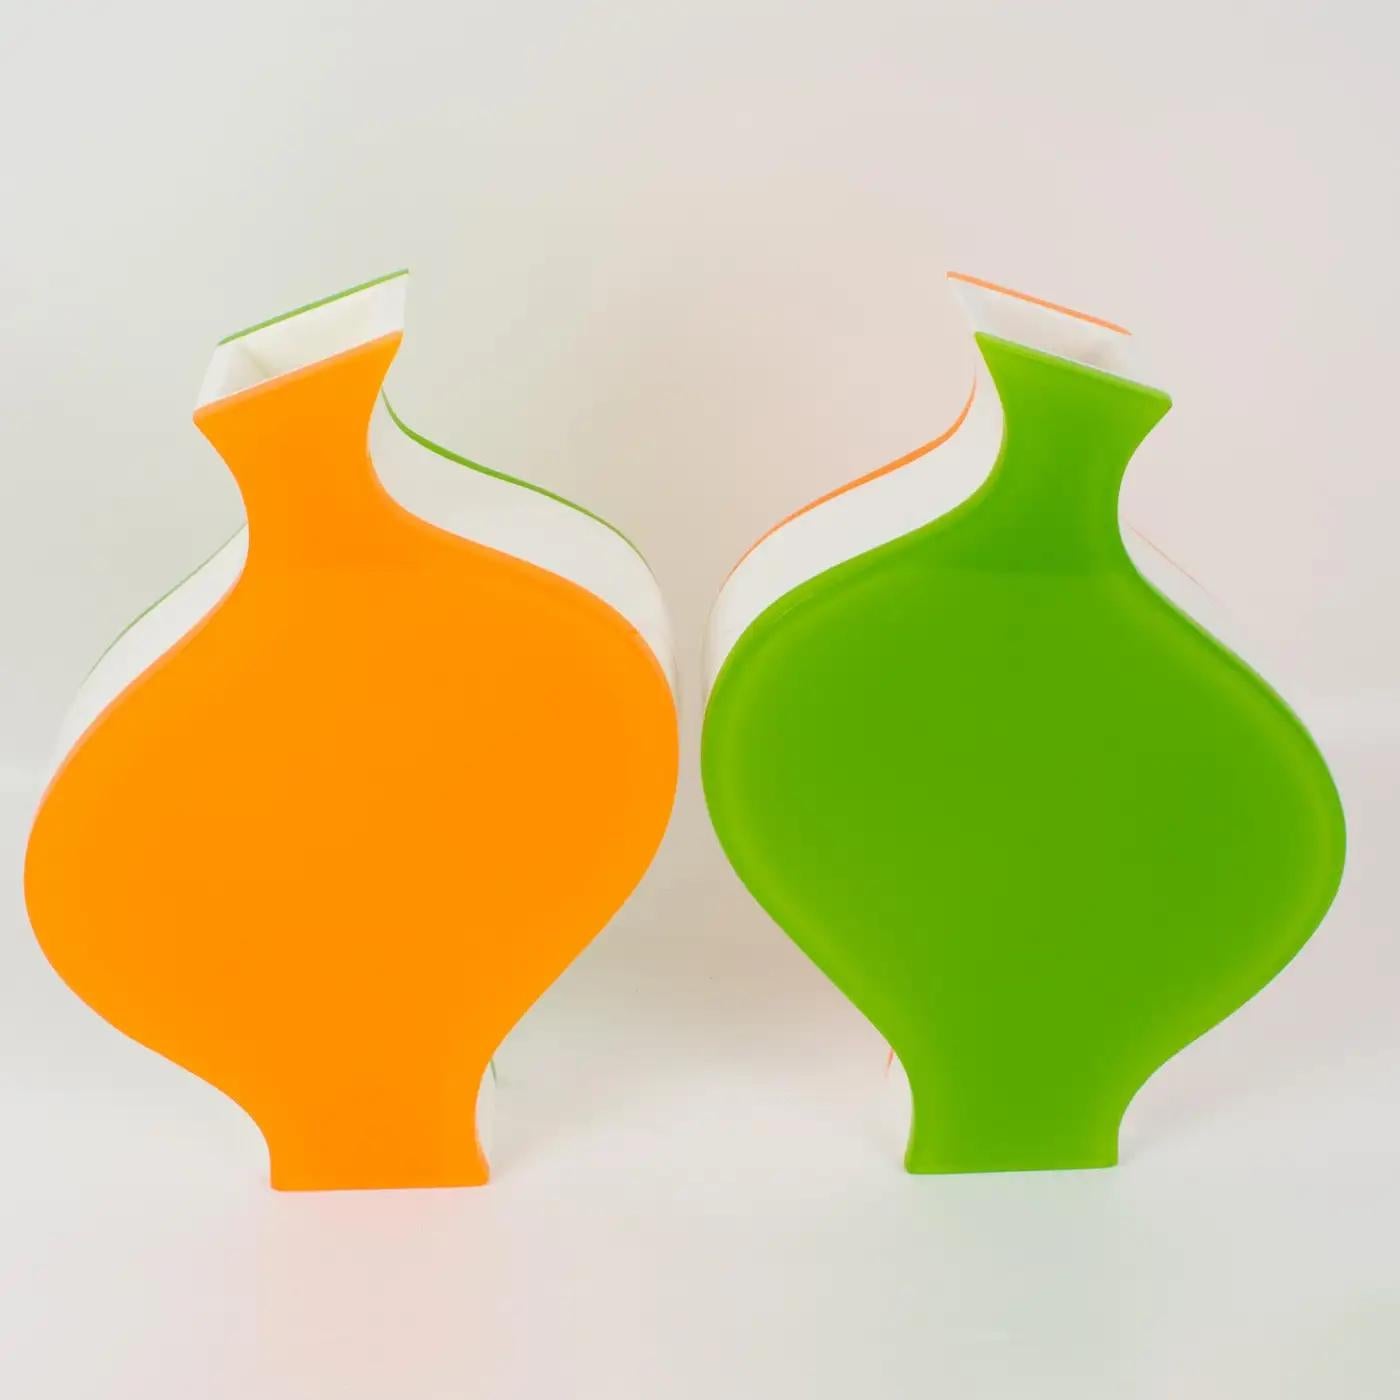 Villeroy & Boch Orange and Green Lucite Vases, 1990s For Sale 4